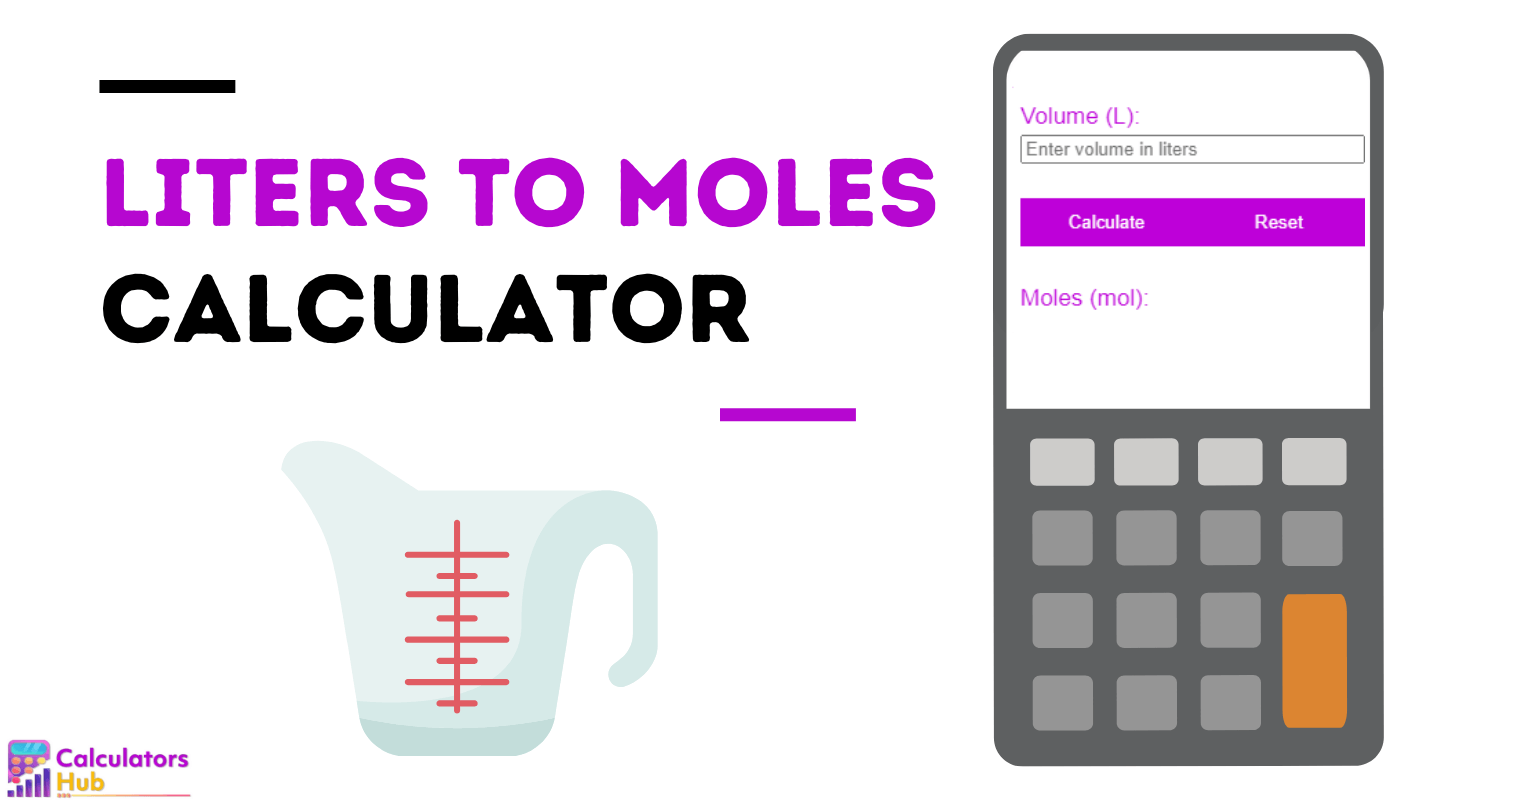 Liters to Moles Calculator